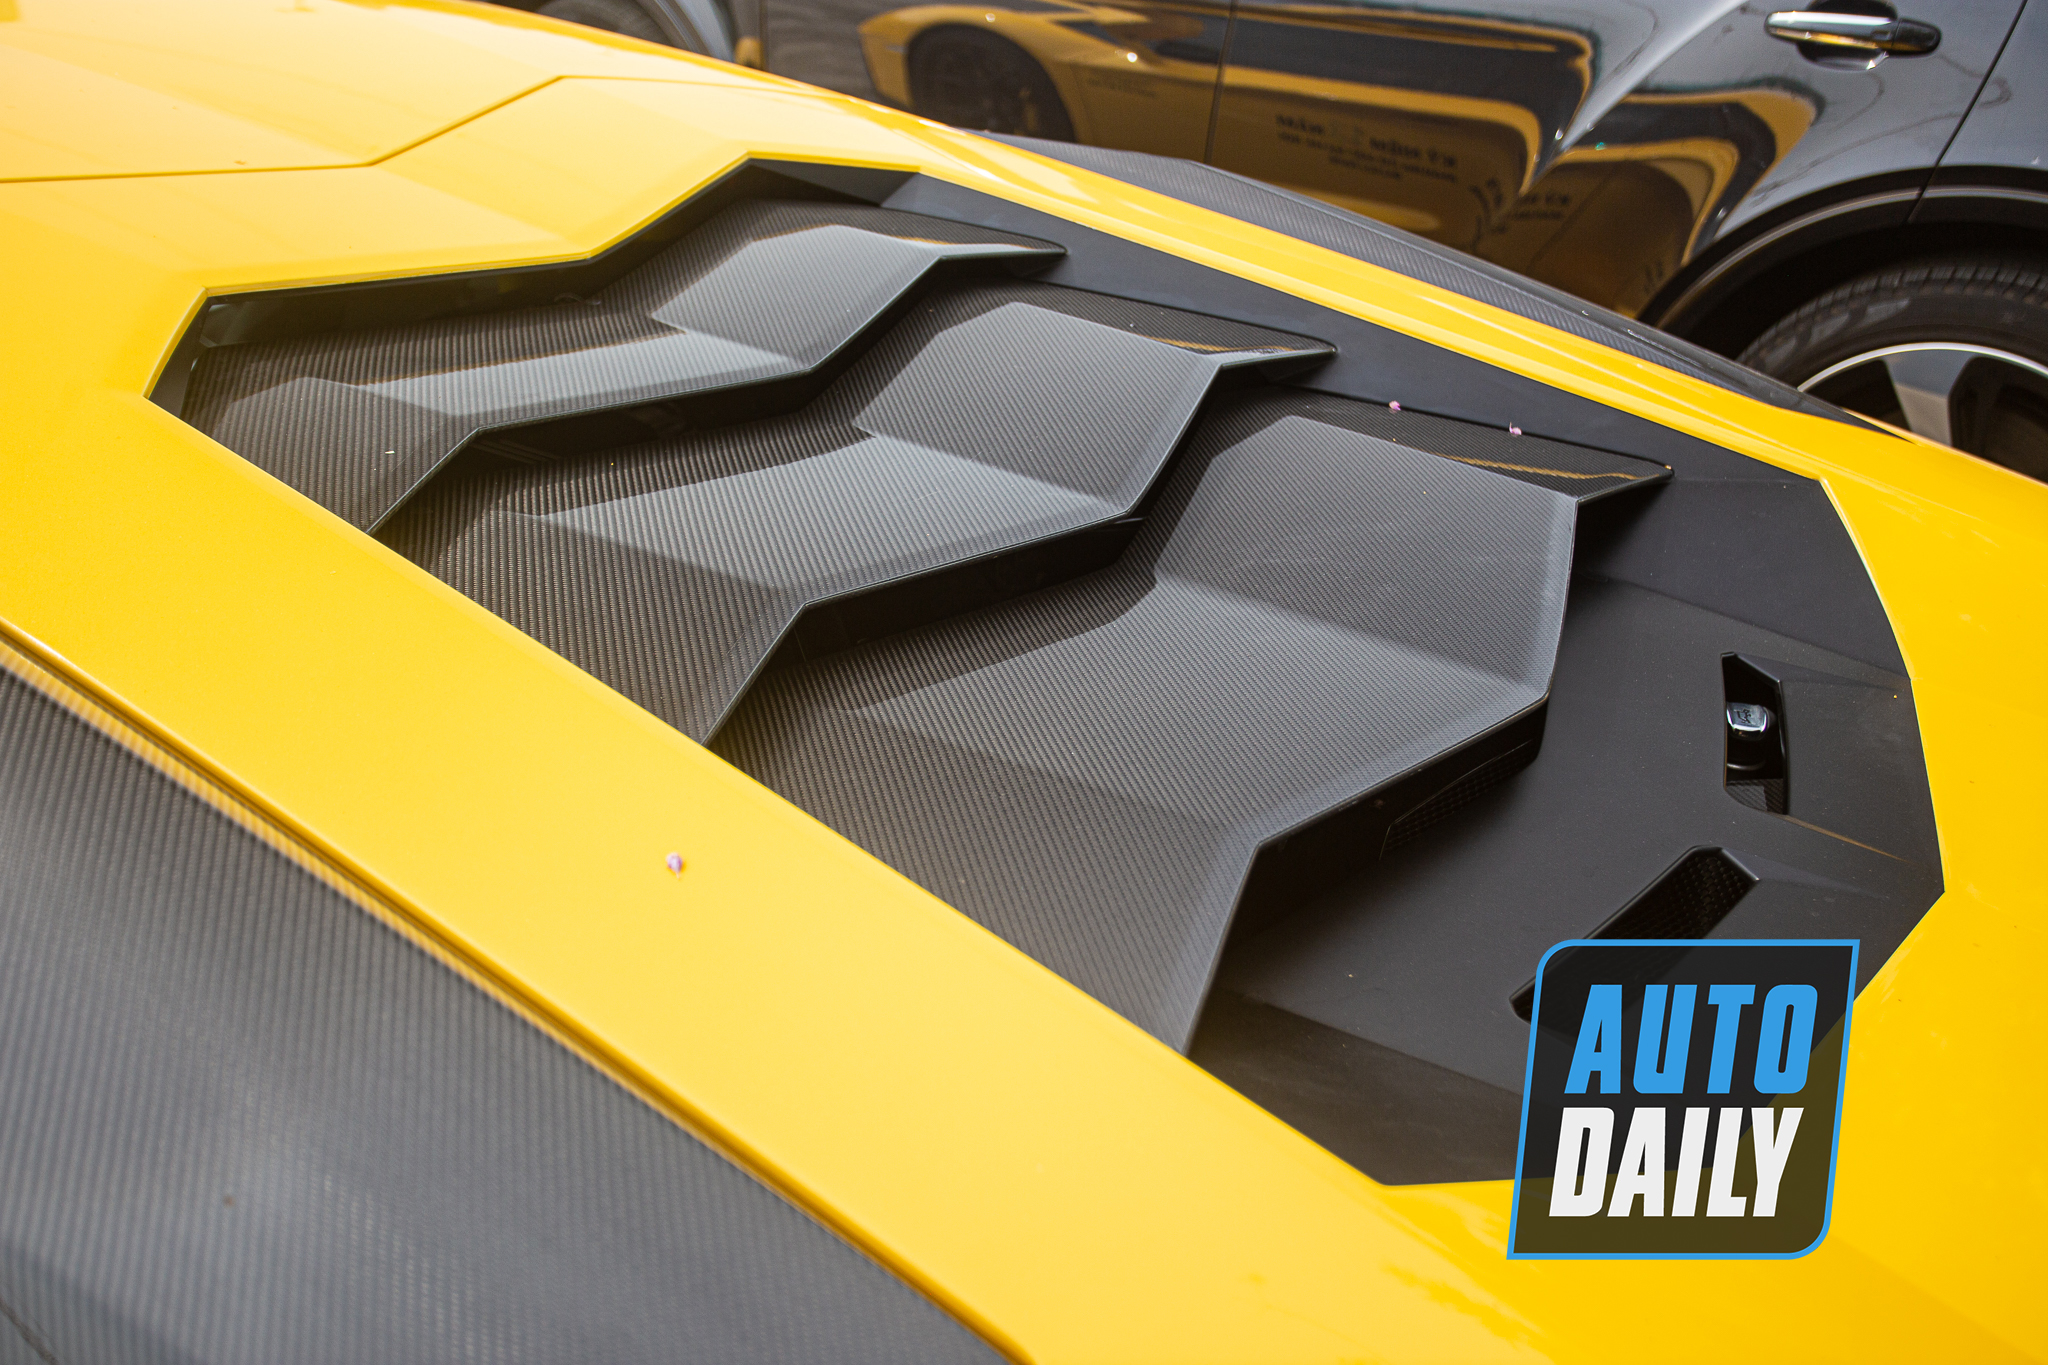 Chi tiết Lamborghini Aventador S độ khủng giá 45 tỷ lamborghini-aventador-s-45-ty-do-khung-autodaily-9.JPG